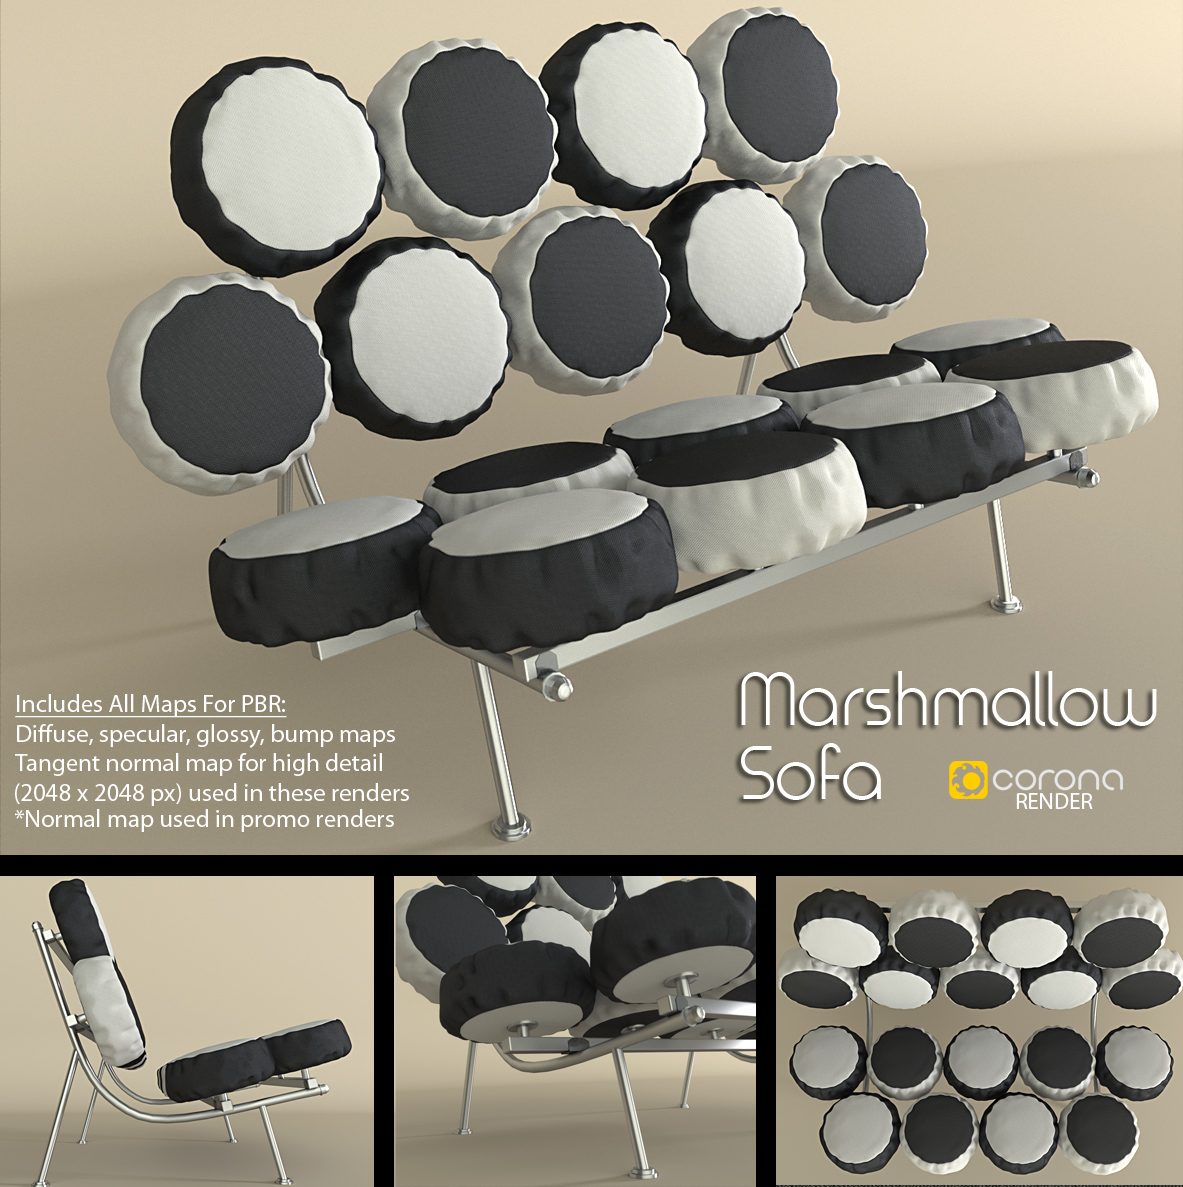 Free 3d Model Marshmallow Sofa By Luxxeon On Deviantart